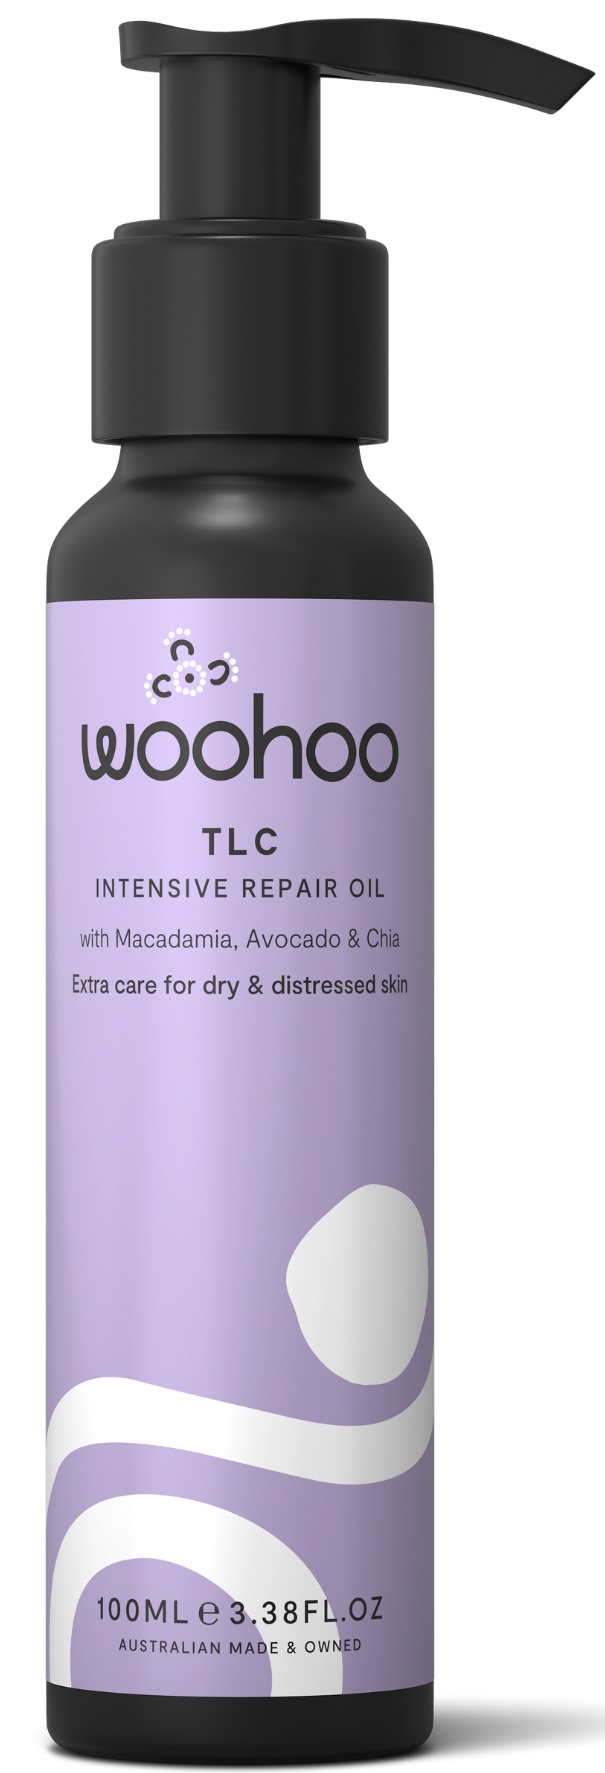 Woohoo TLC Intensive Repair Oil